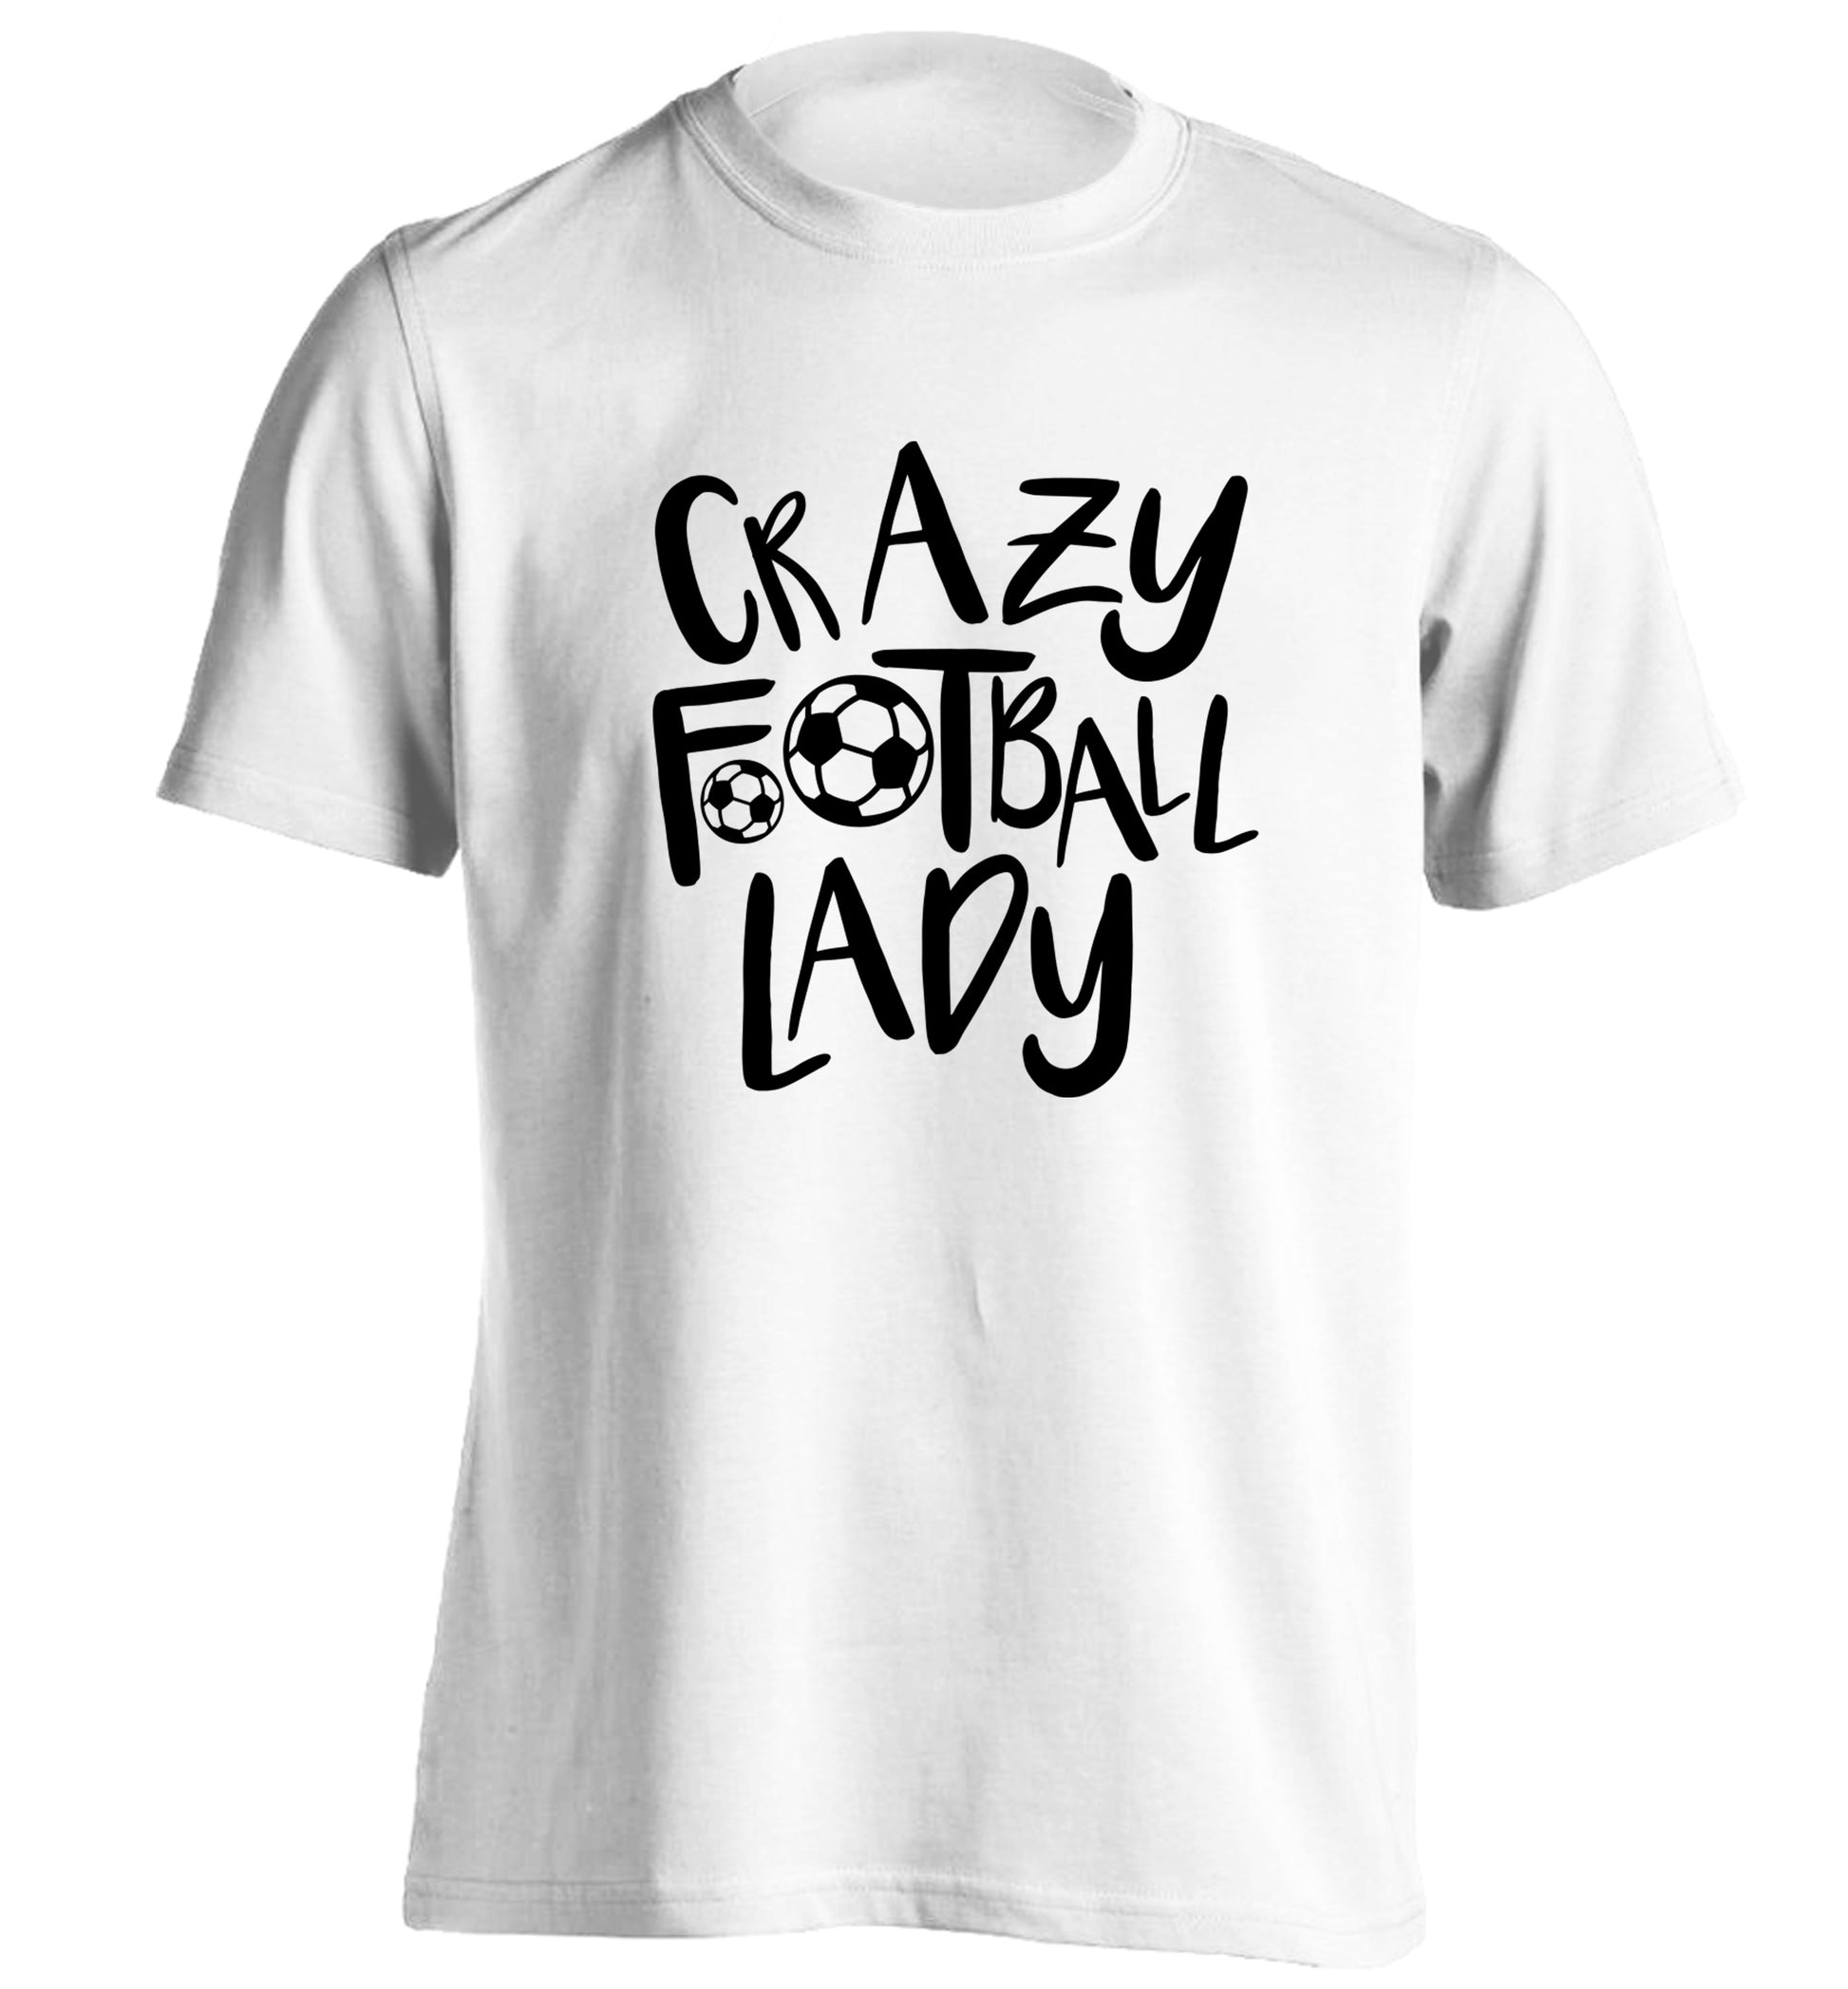 Crazy football lady adults unisexwhite Tshirt 2XL